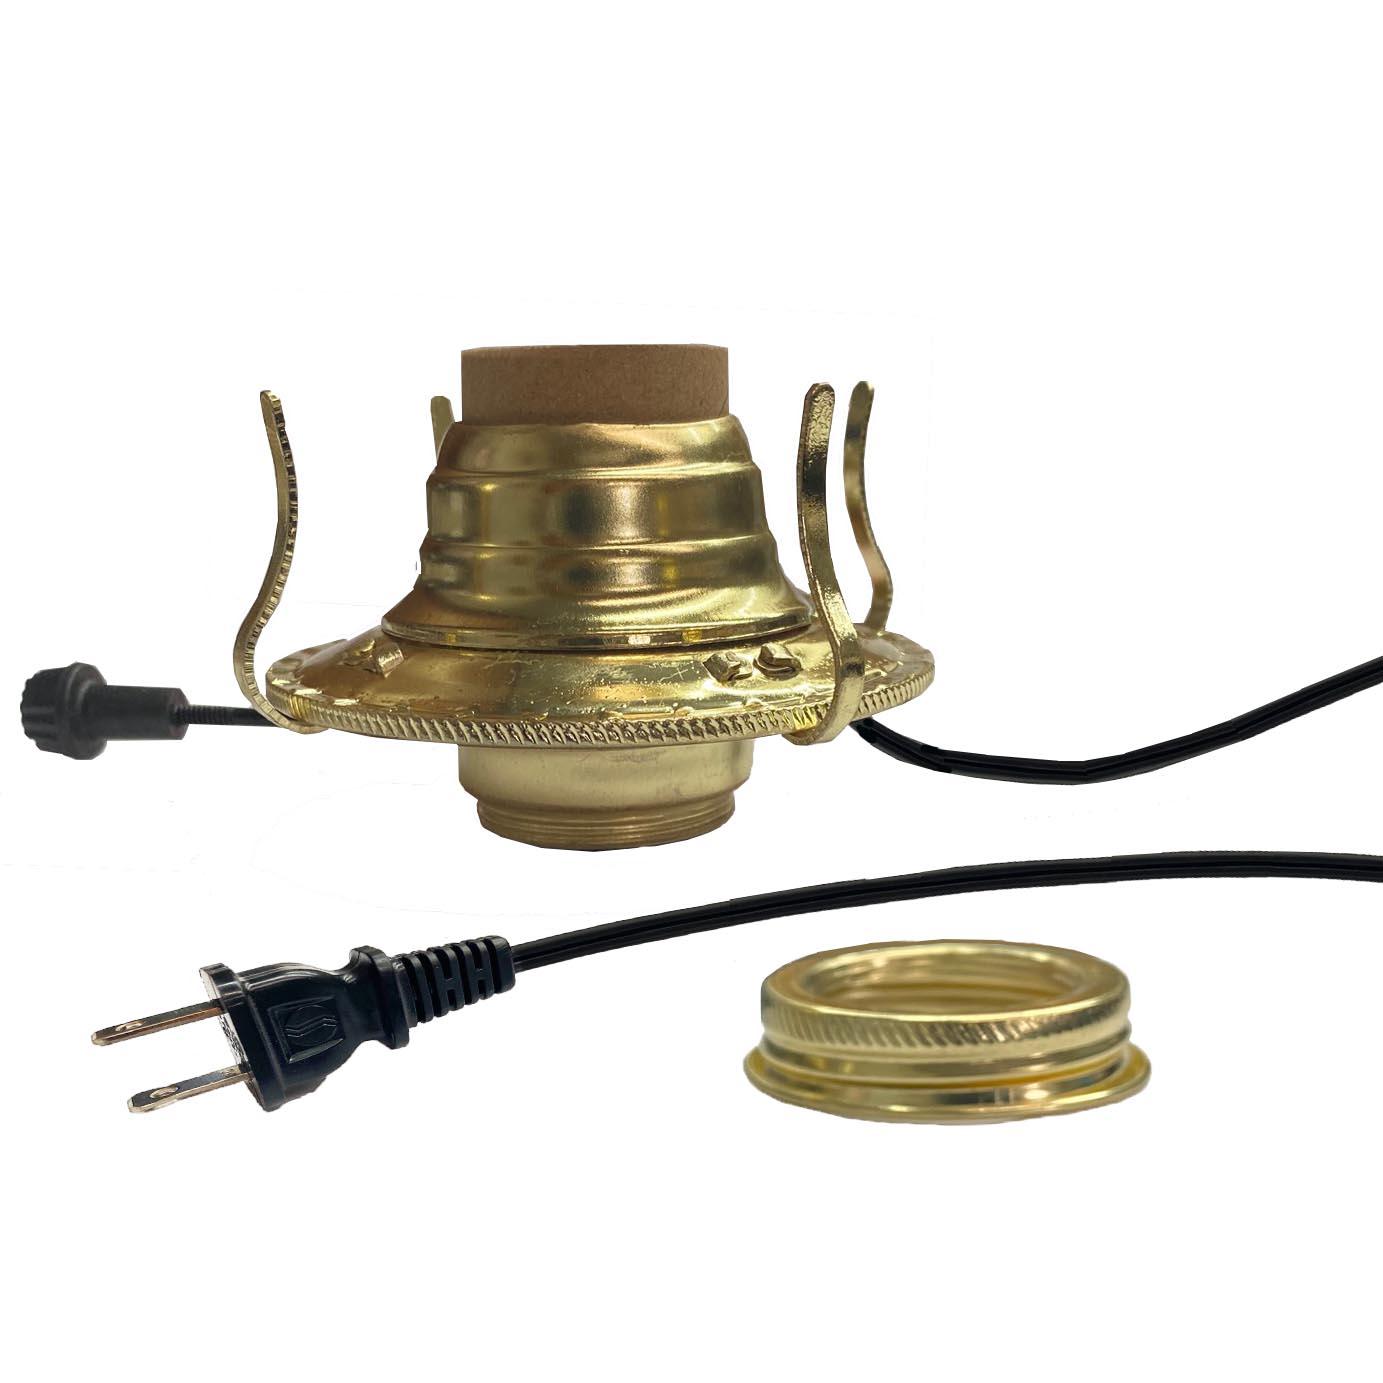 Electric Oil Lamp Burners, Brass Plated #2-Black - Paxton Hardware ltd